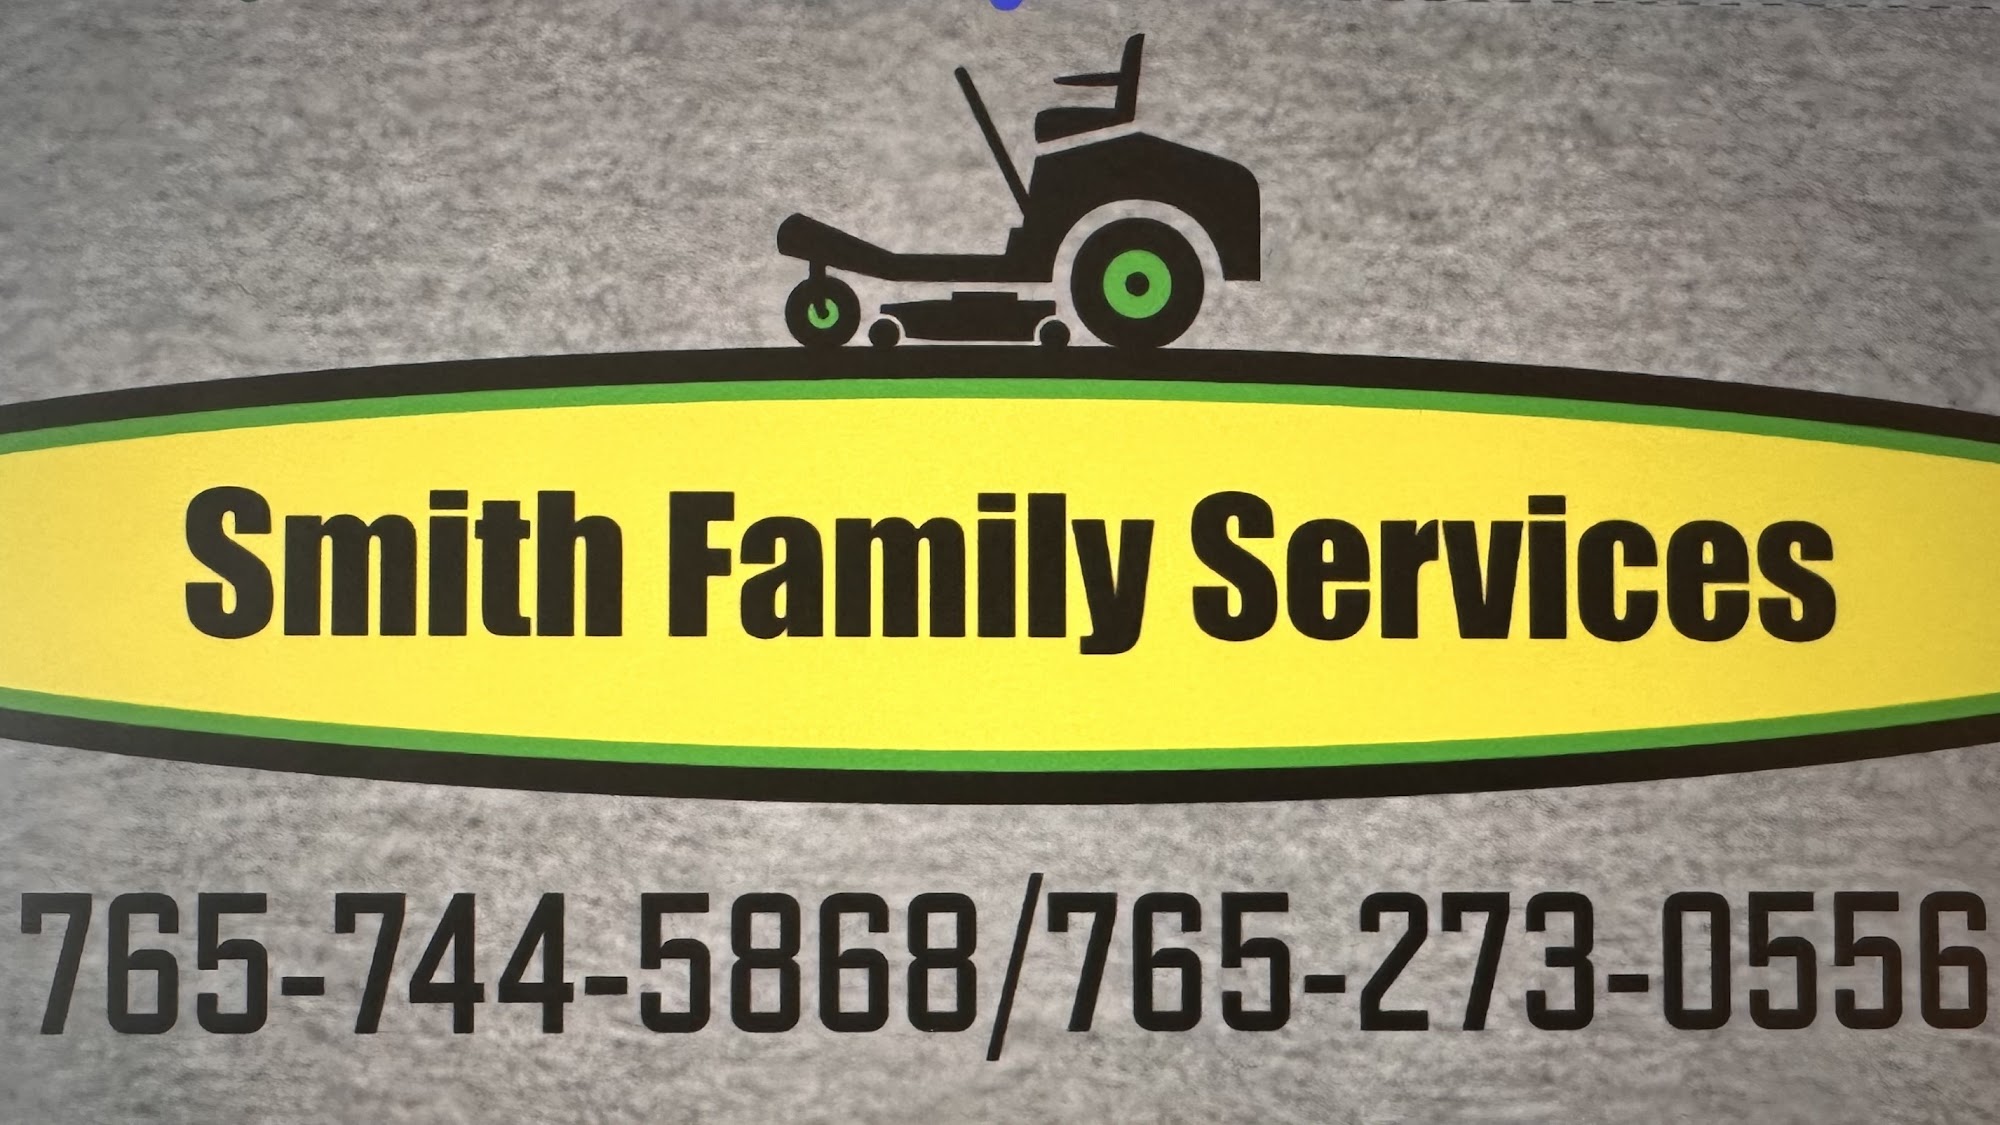 Smith Family Services